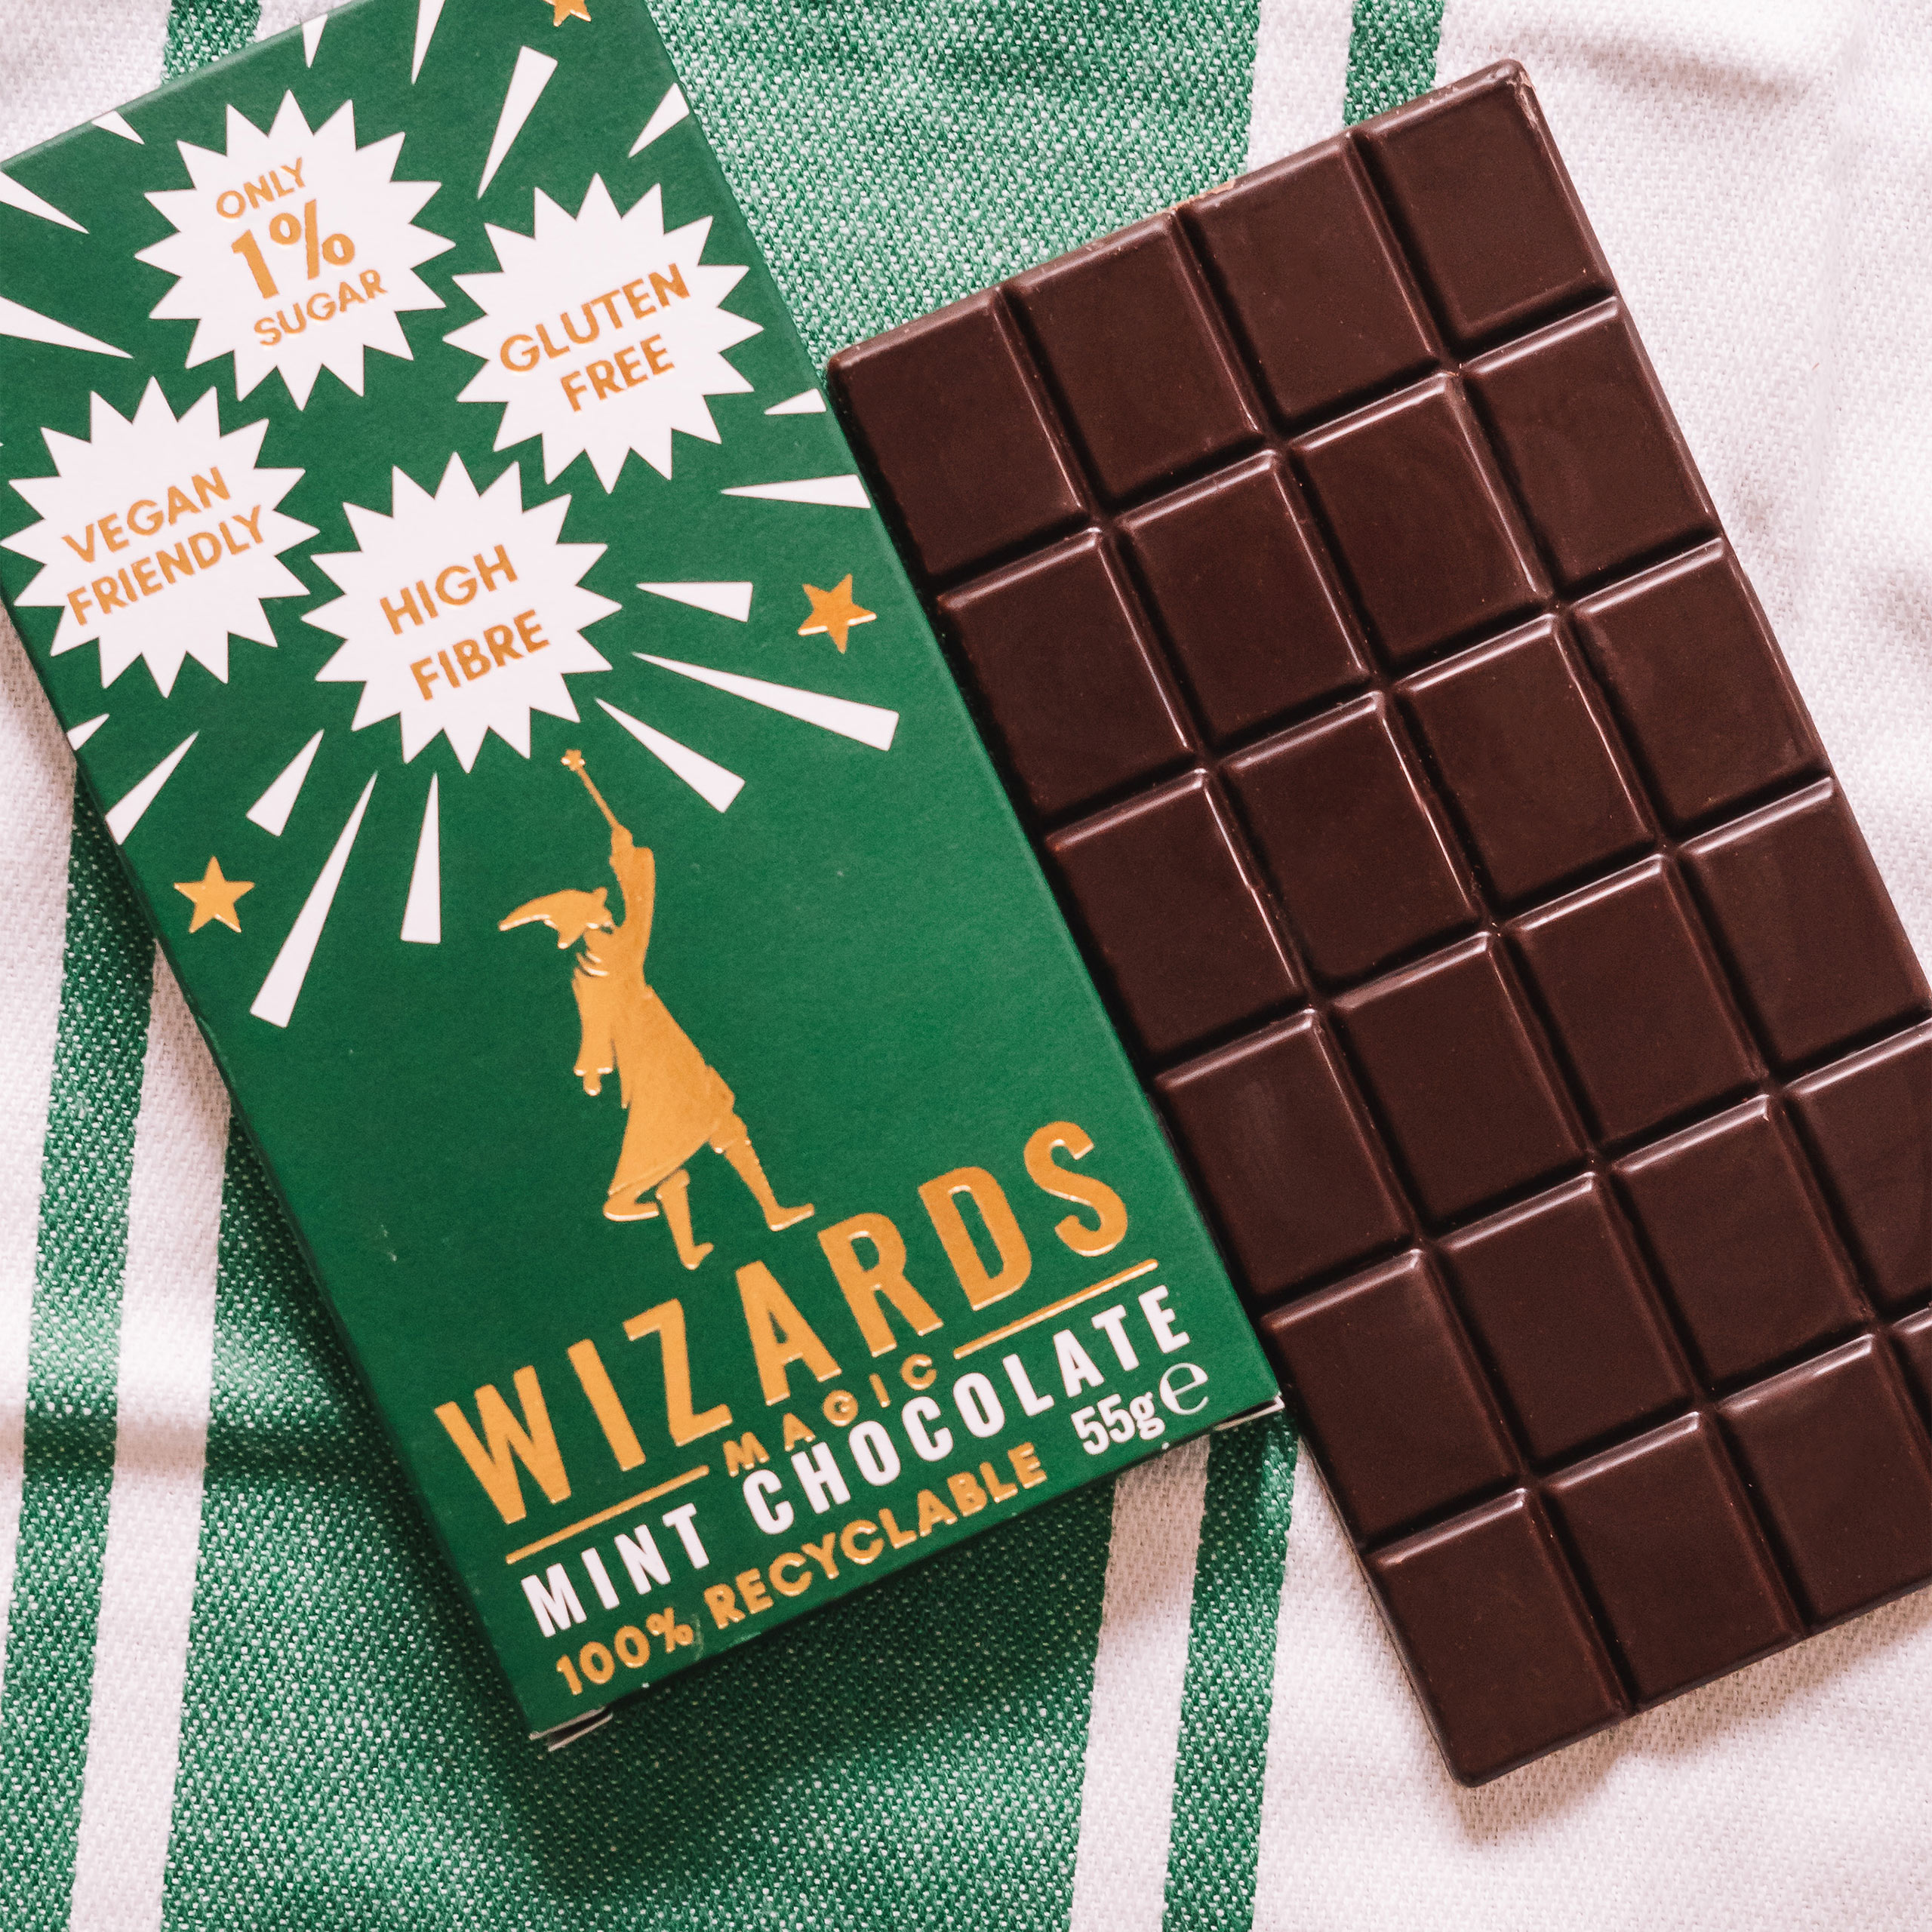 Wizards Magic - Mint Schokolade 12 Tafeln